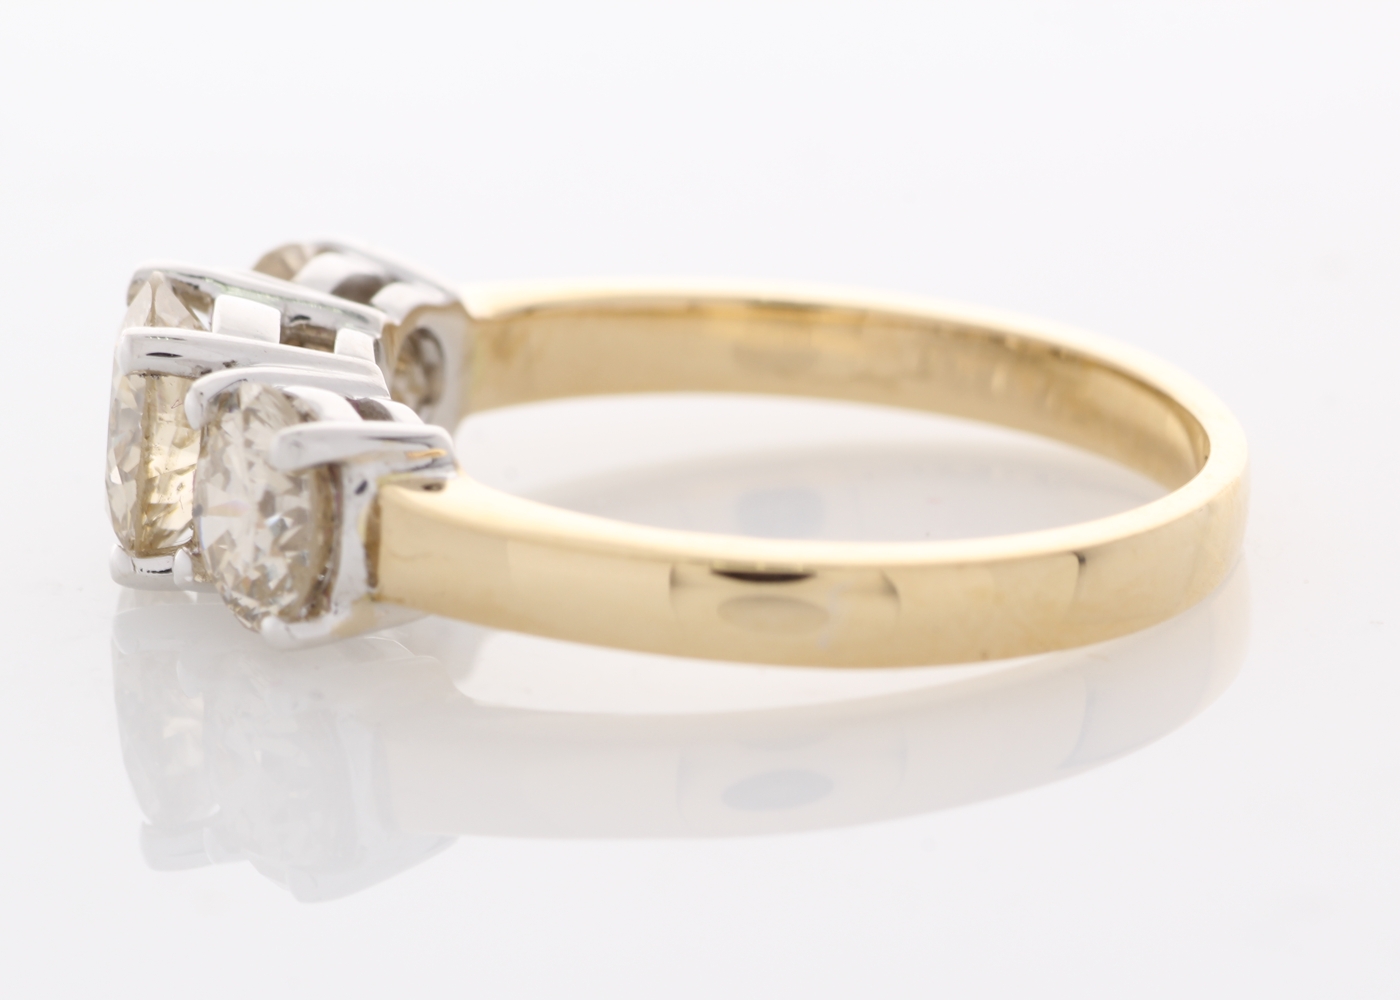 18ct Yellow Gold Three Stone Claw Set Diamond Ring 2.43 Carats - Image 3 of 5